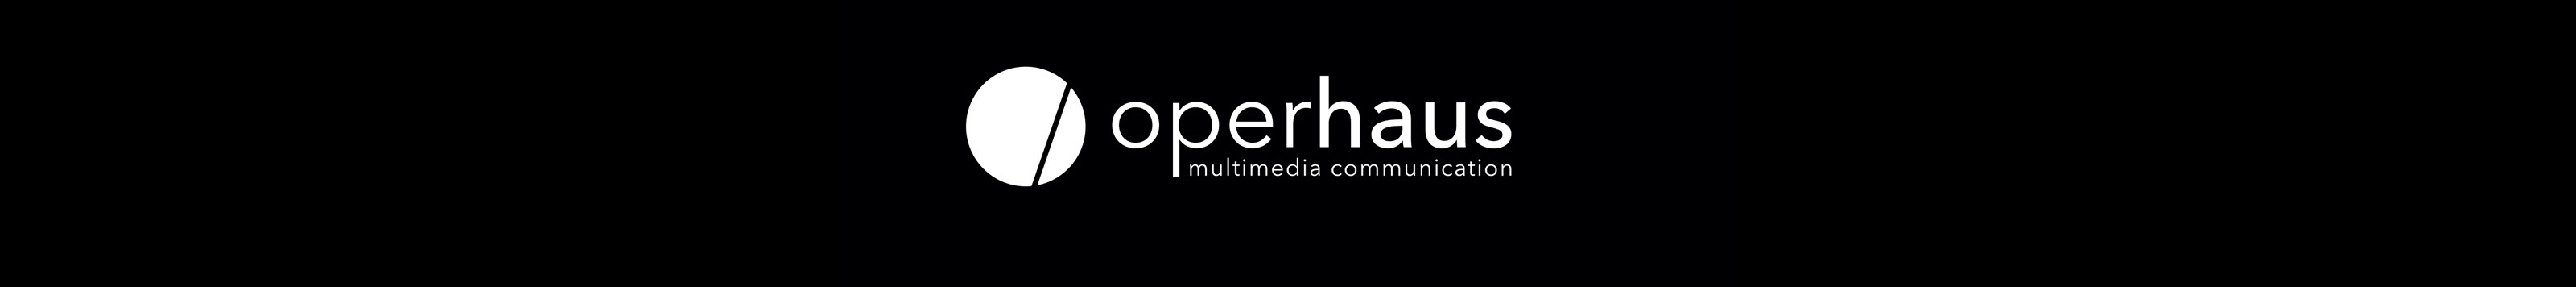 OperHaus Multimedia Communication's profile banner